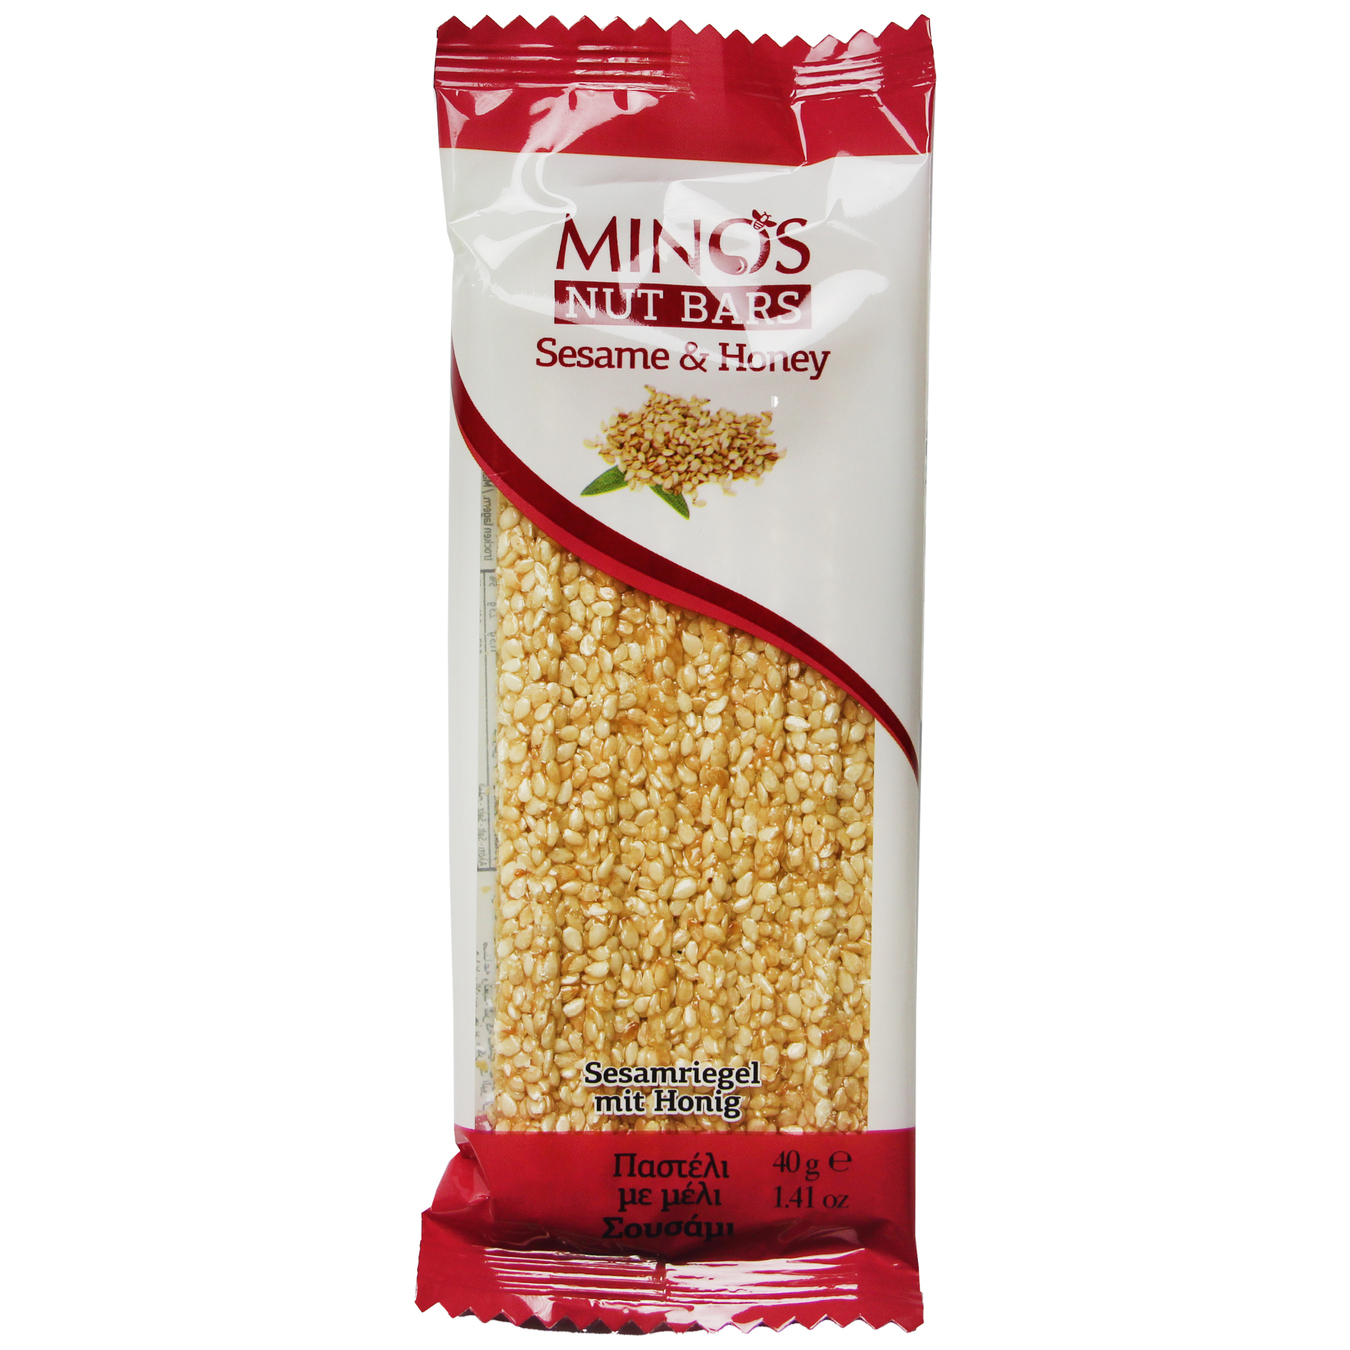 Minos With Sesame And Honey Nut Bar 40g